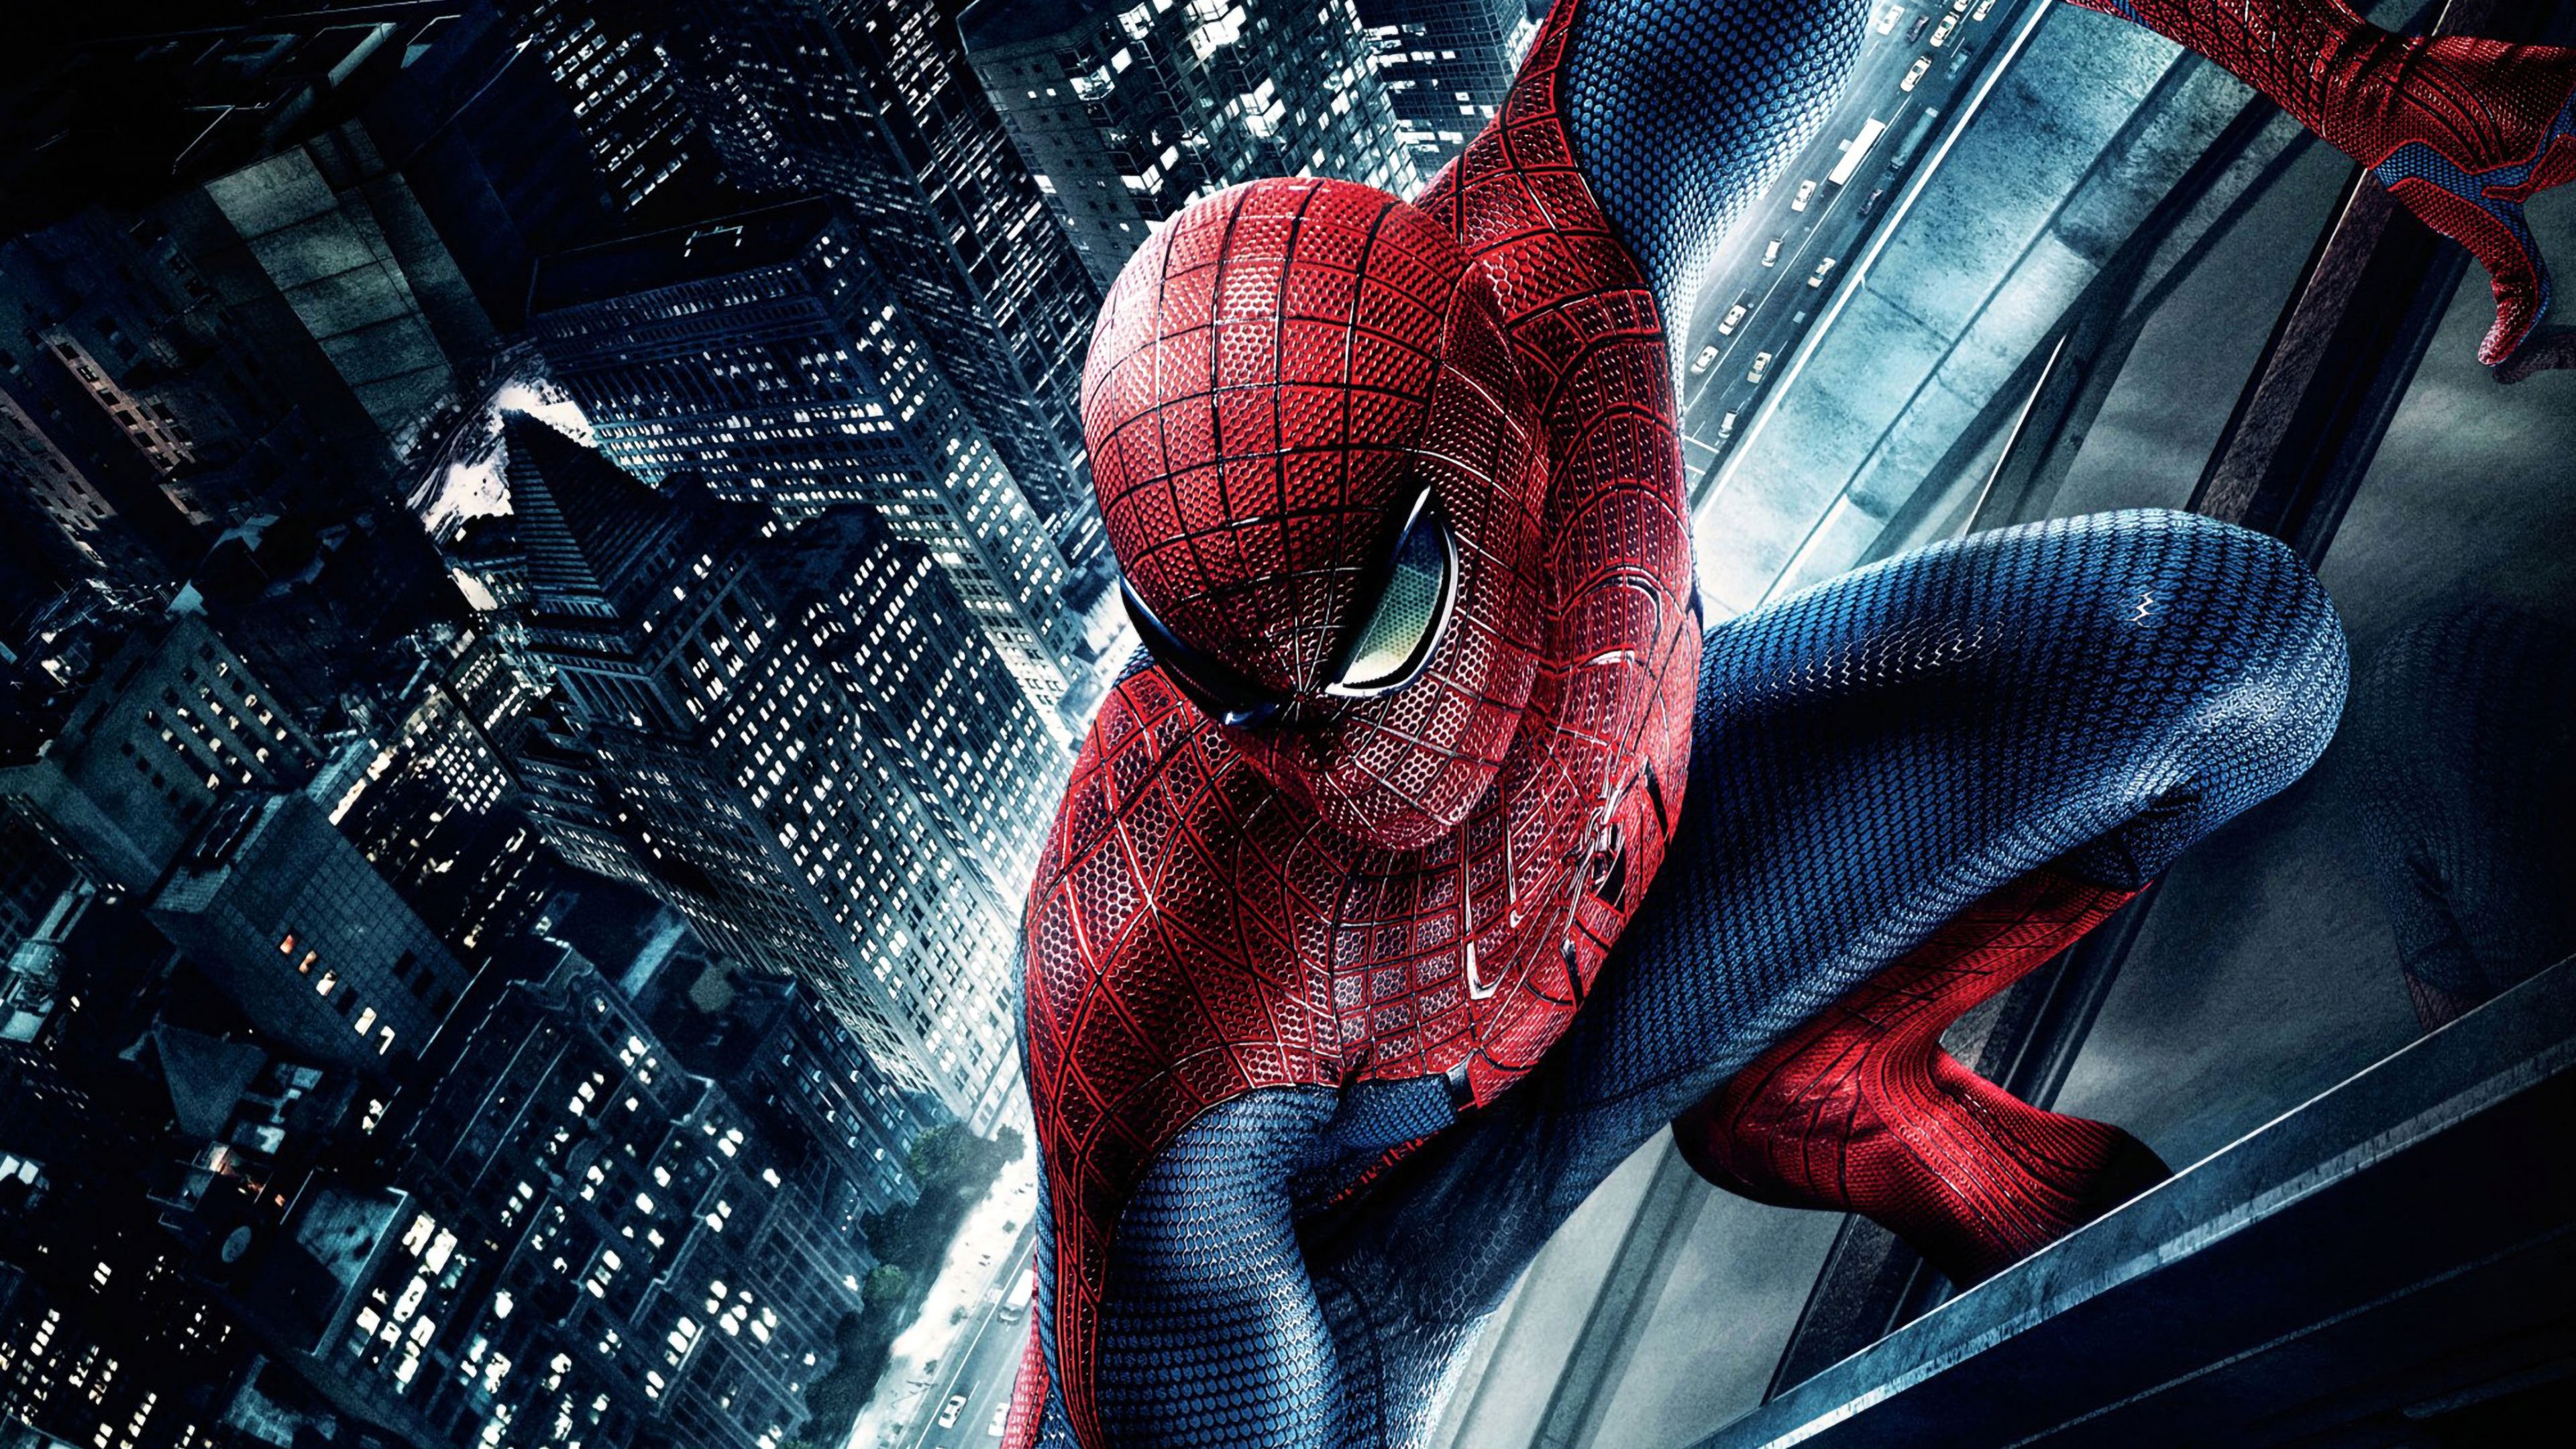 The Amazing Spiderman Movie Poster 4K